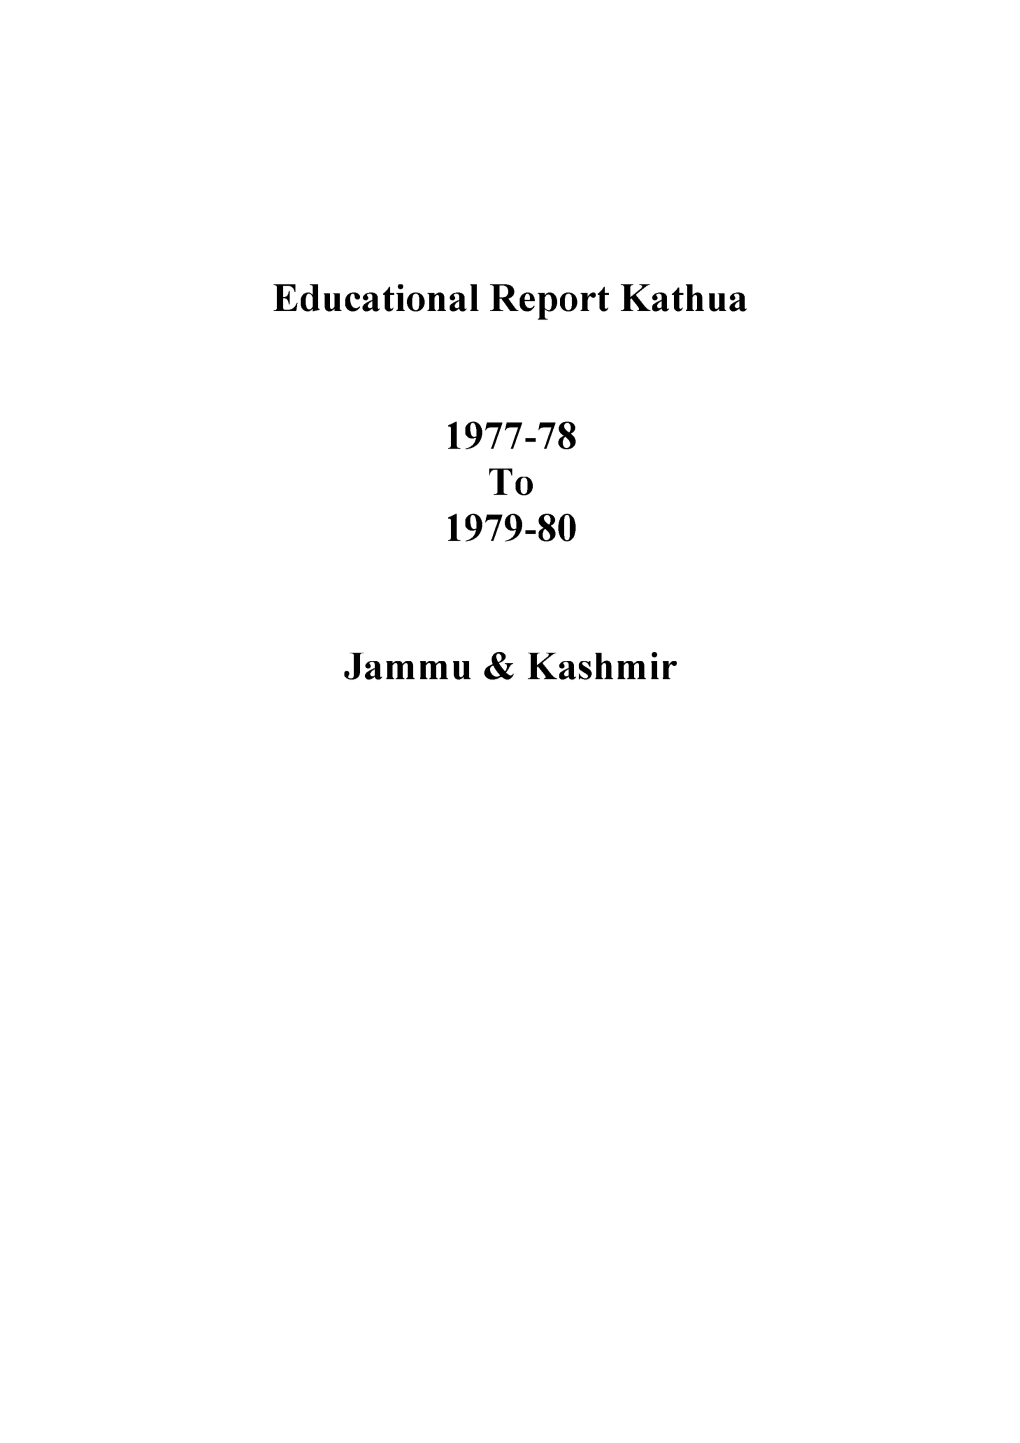 Educational Report Kathua to Jammu & Kashmir